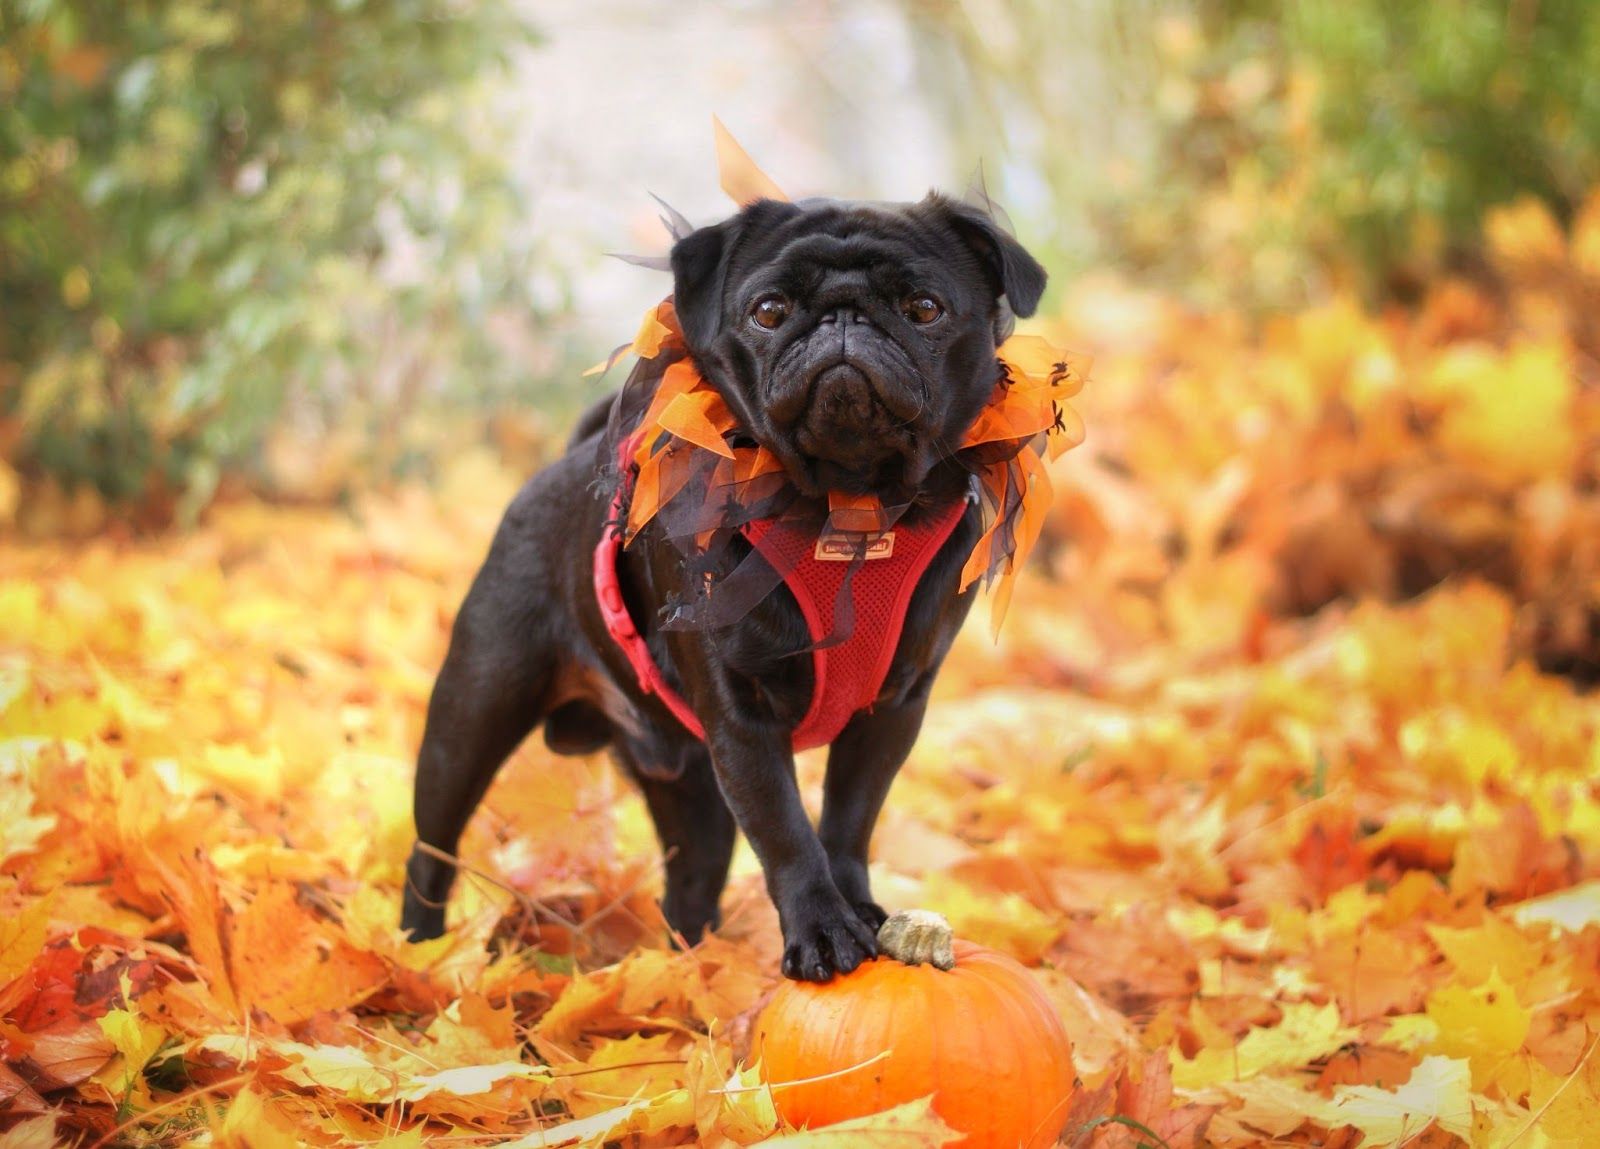 black pug standing on a pumpkin in fall foliage